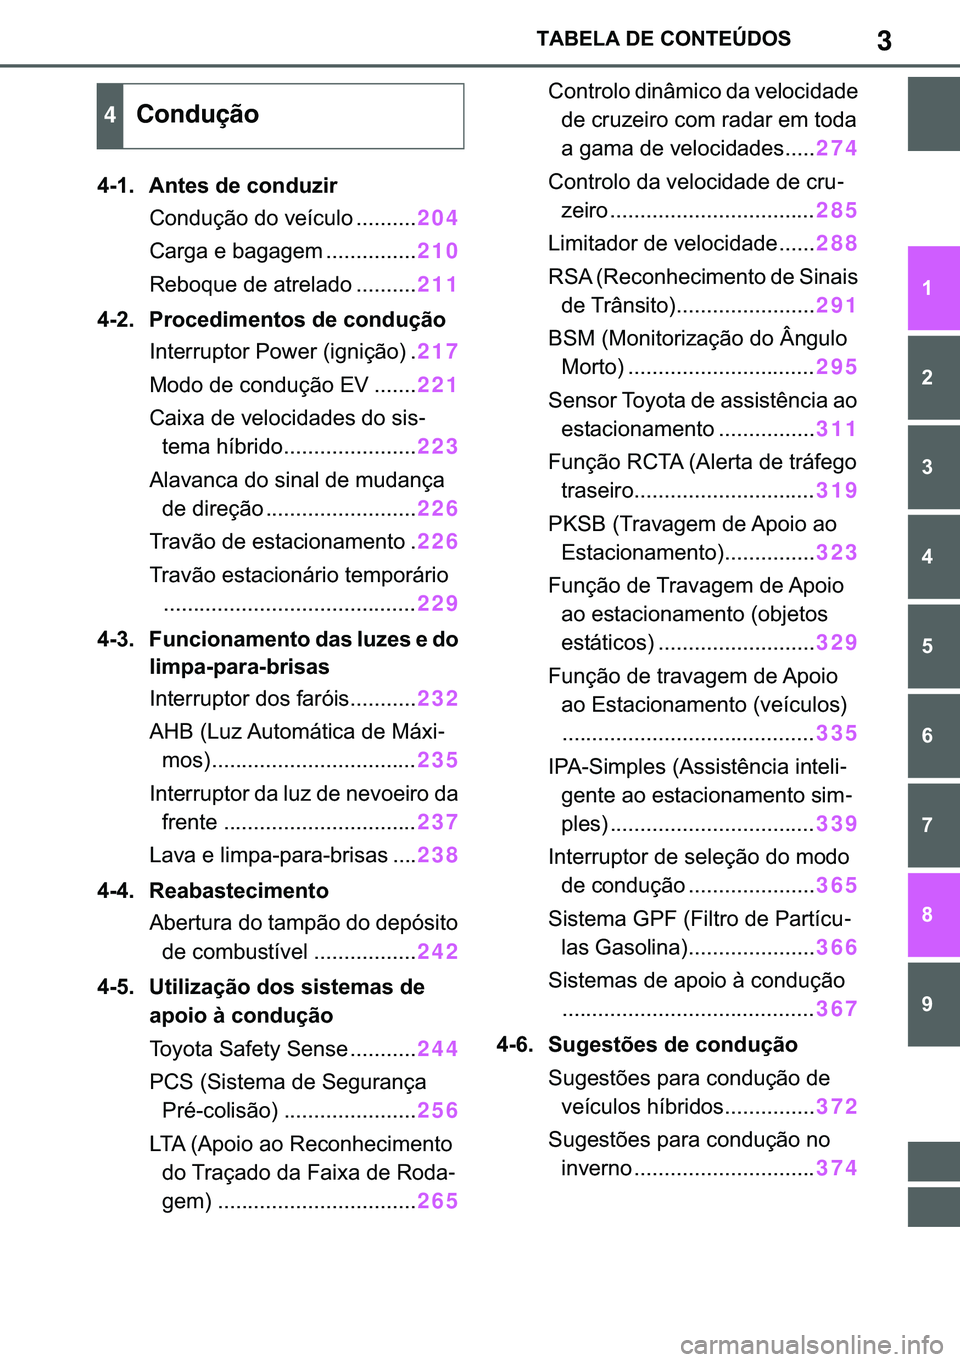 TOYOTA COROLLA 2021  Manual de utilização (in Portuguese) 3
�&�2�5�2�/�/�$ �+�9 �7�0�0�7 �(�(
�7�$�%�(�/�$���(��&�2�1�7�(�Ò��2�6
�
� � � � �
� �
�
���� �$�Q�W�H�V��G�H��F�R�Q�G�X�]�L�U
�&�R�Q�G�X�o�m�R��G�R��Y�H�t�F�X�O�R �������